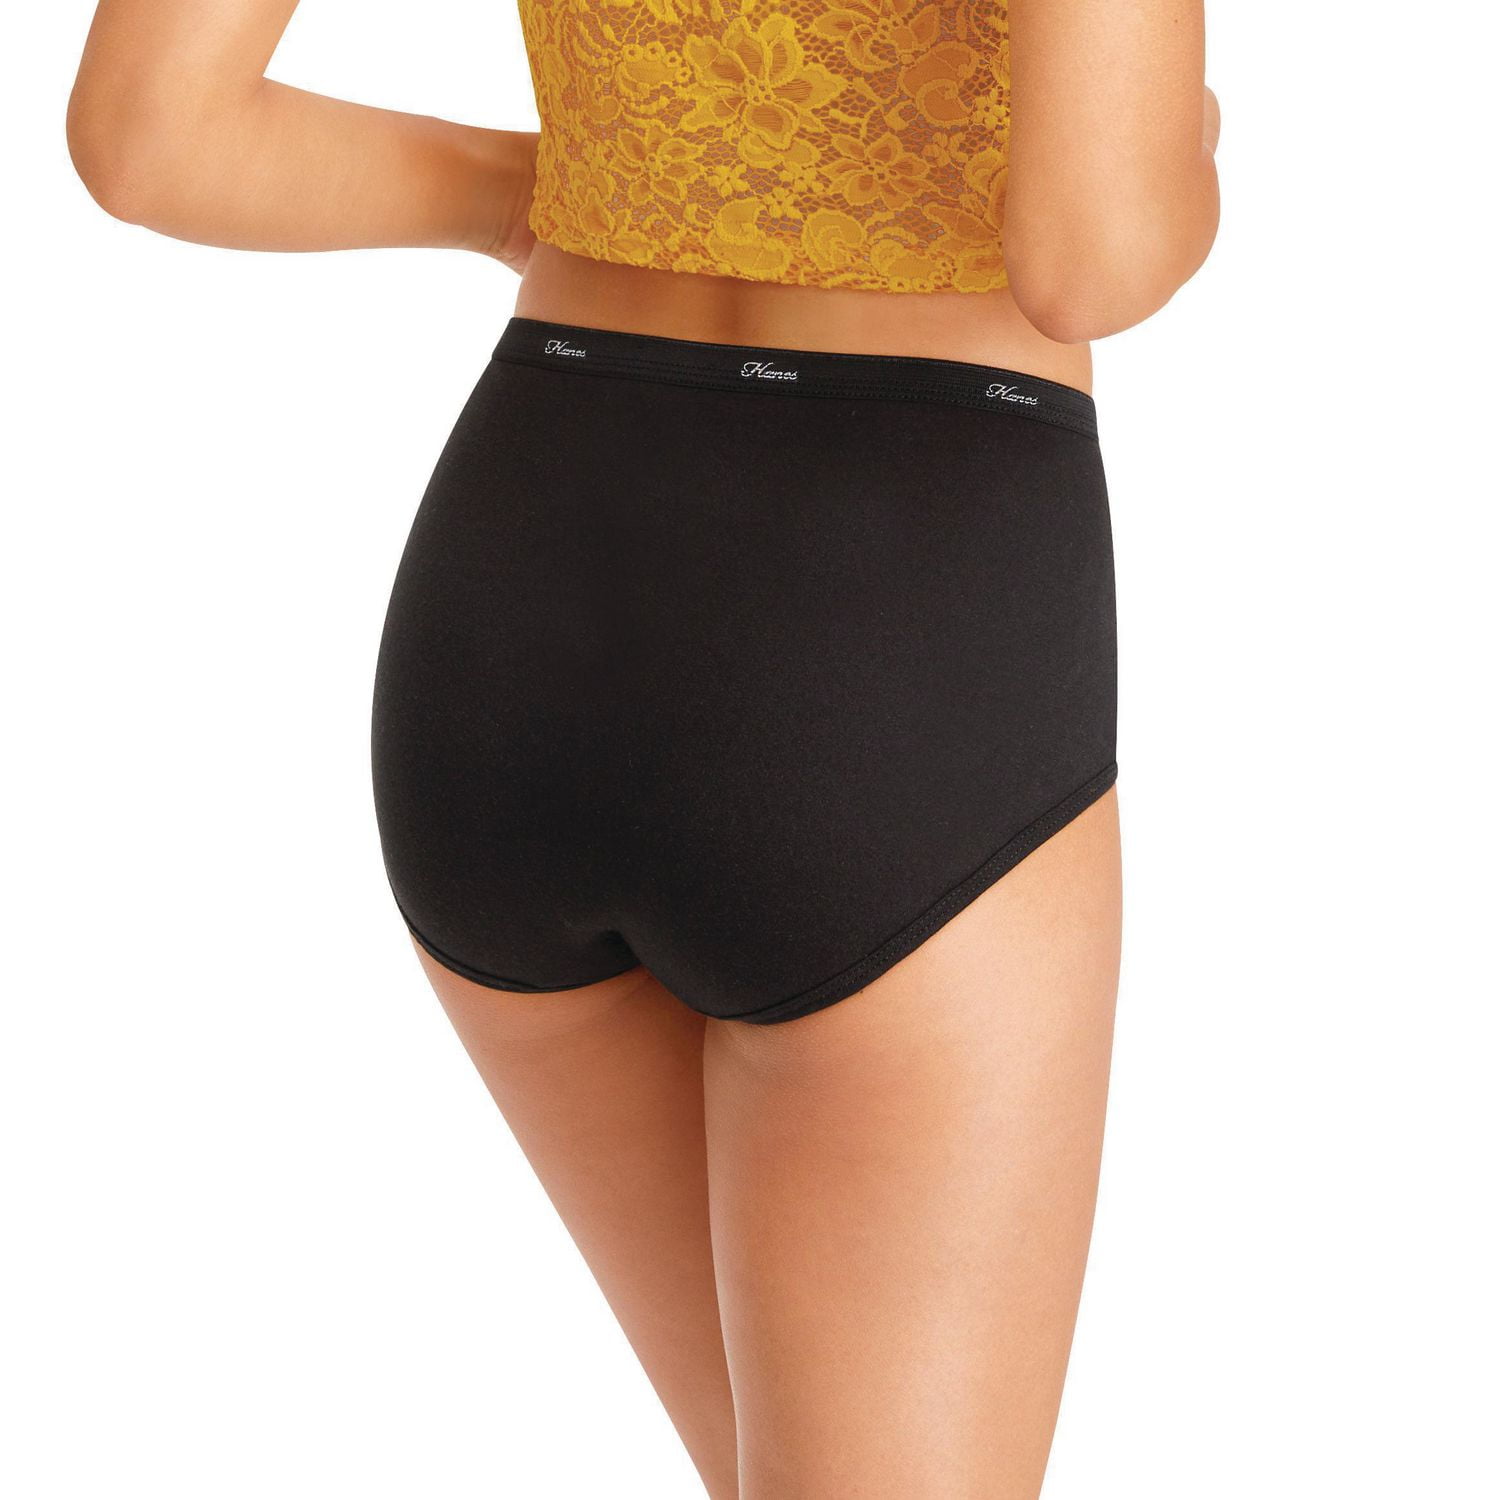 Hanes Women's Cotton Bikini - Pack of 6, Sizes: S-L